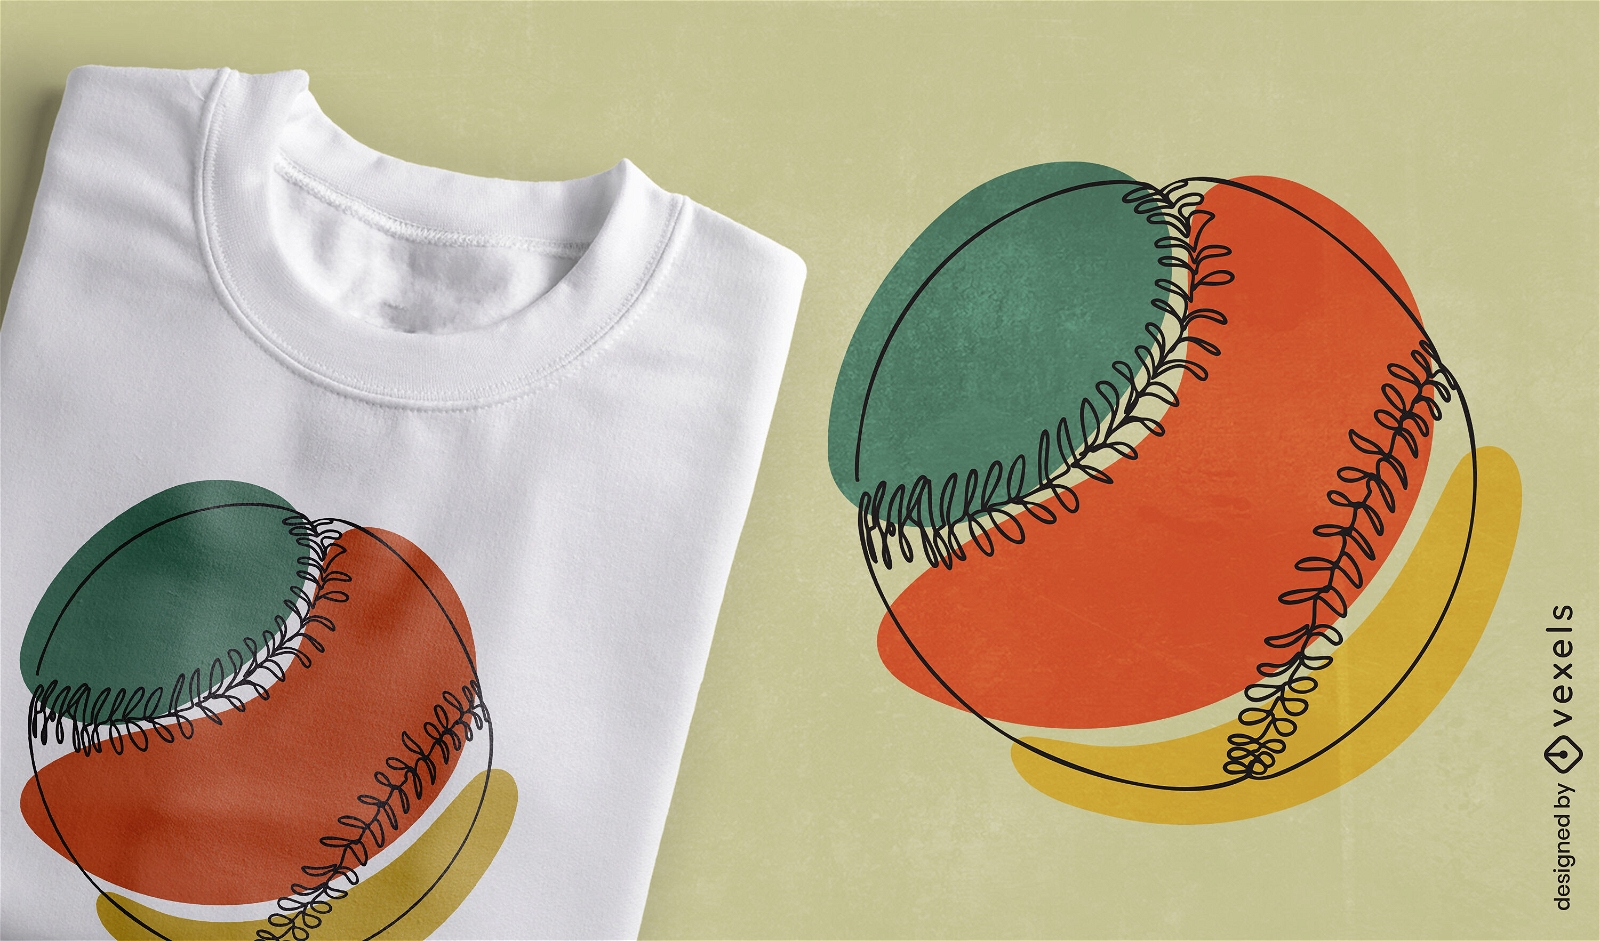 Dise?o de camiseta de l?nea continua de pelota de b?isbol.